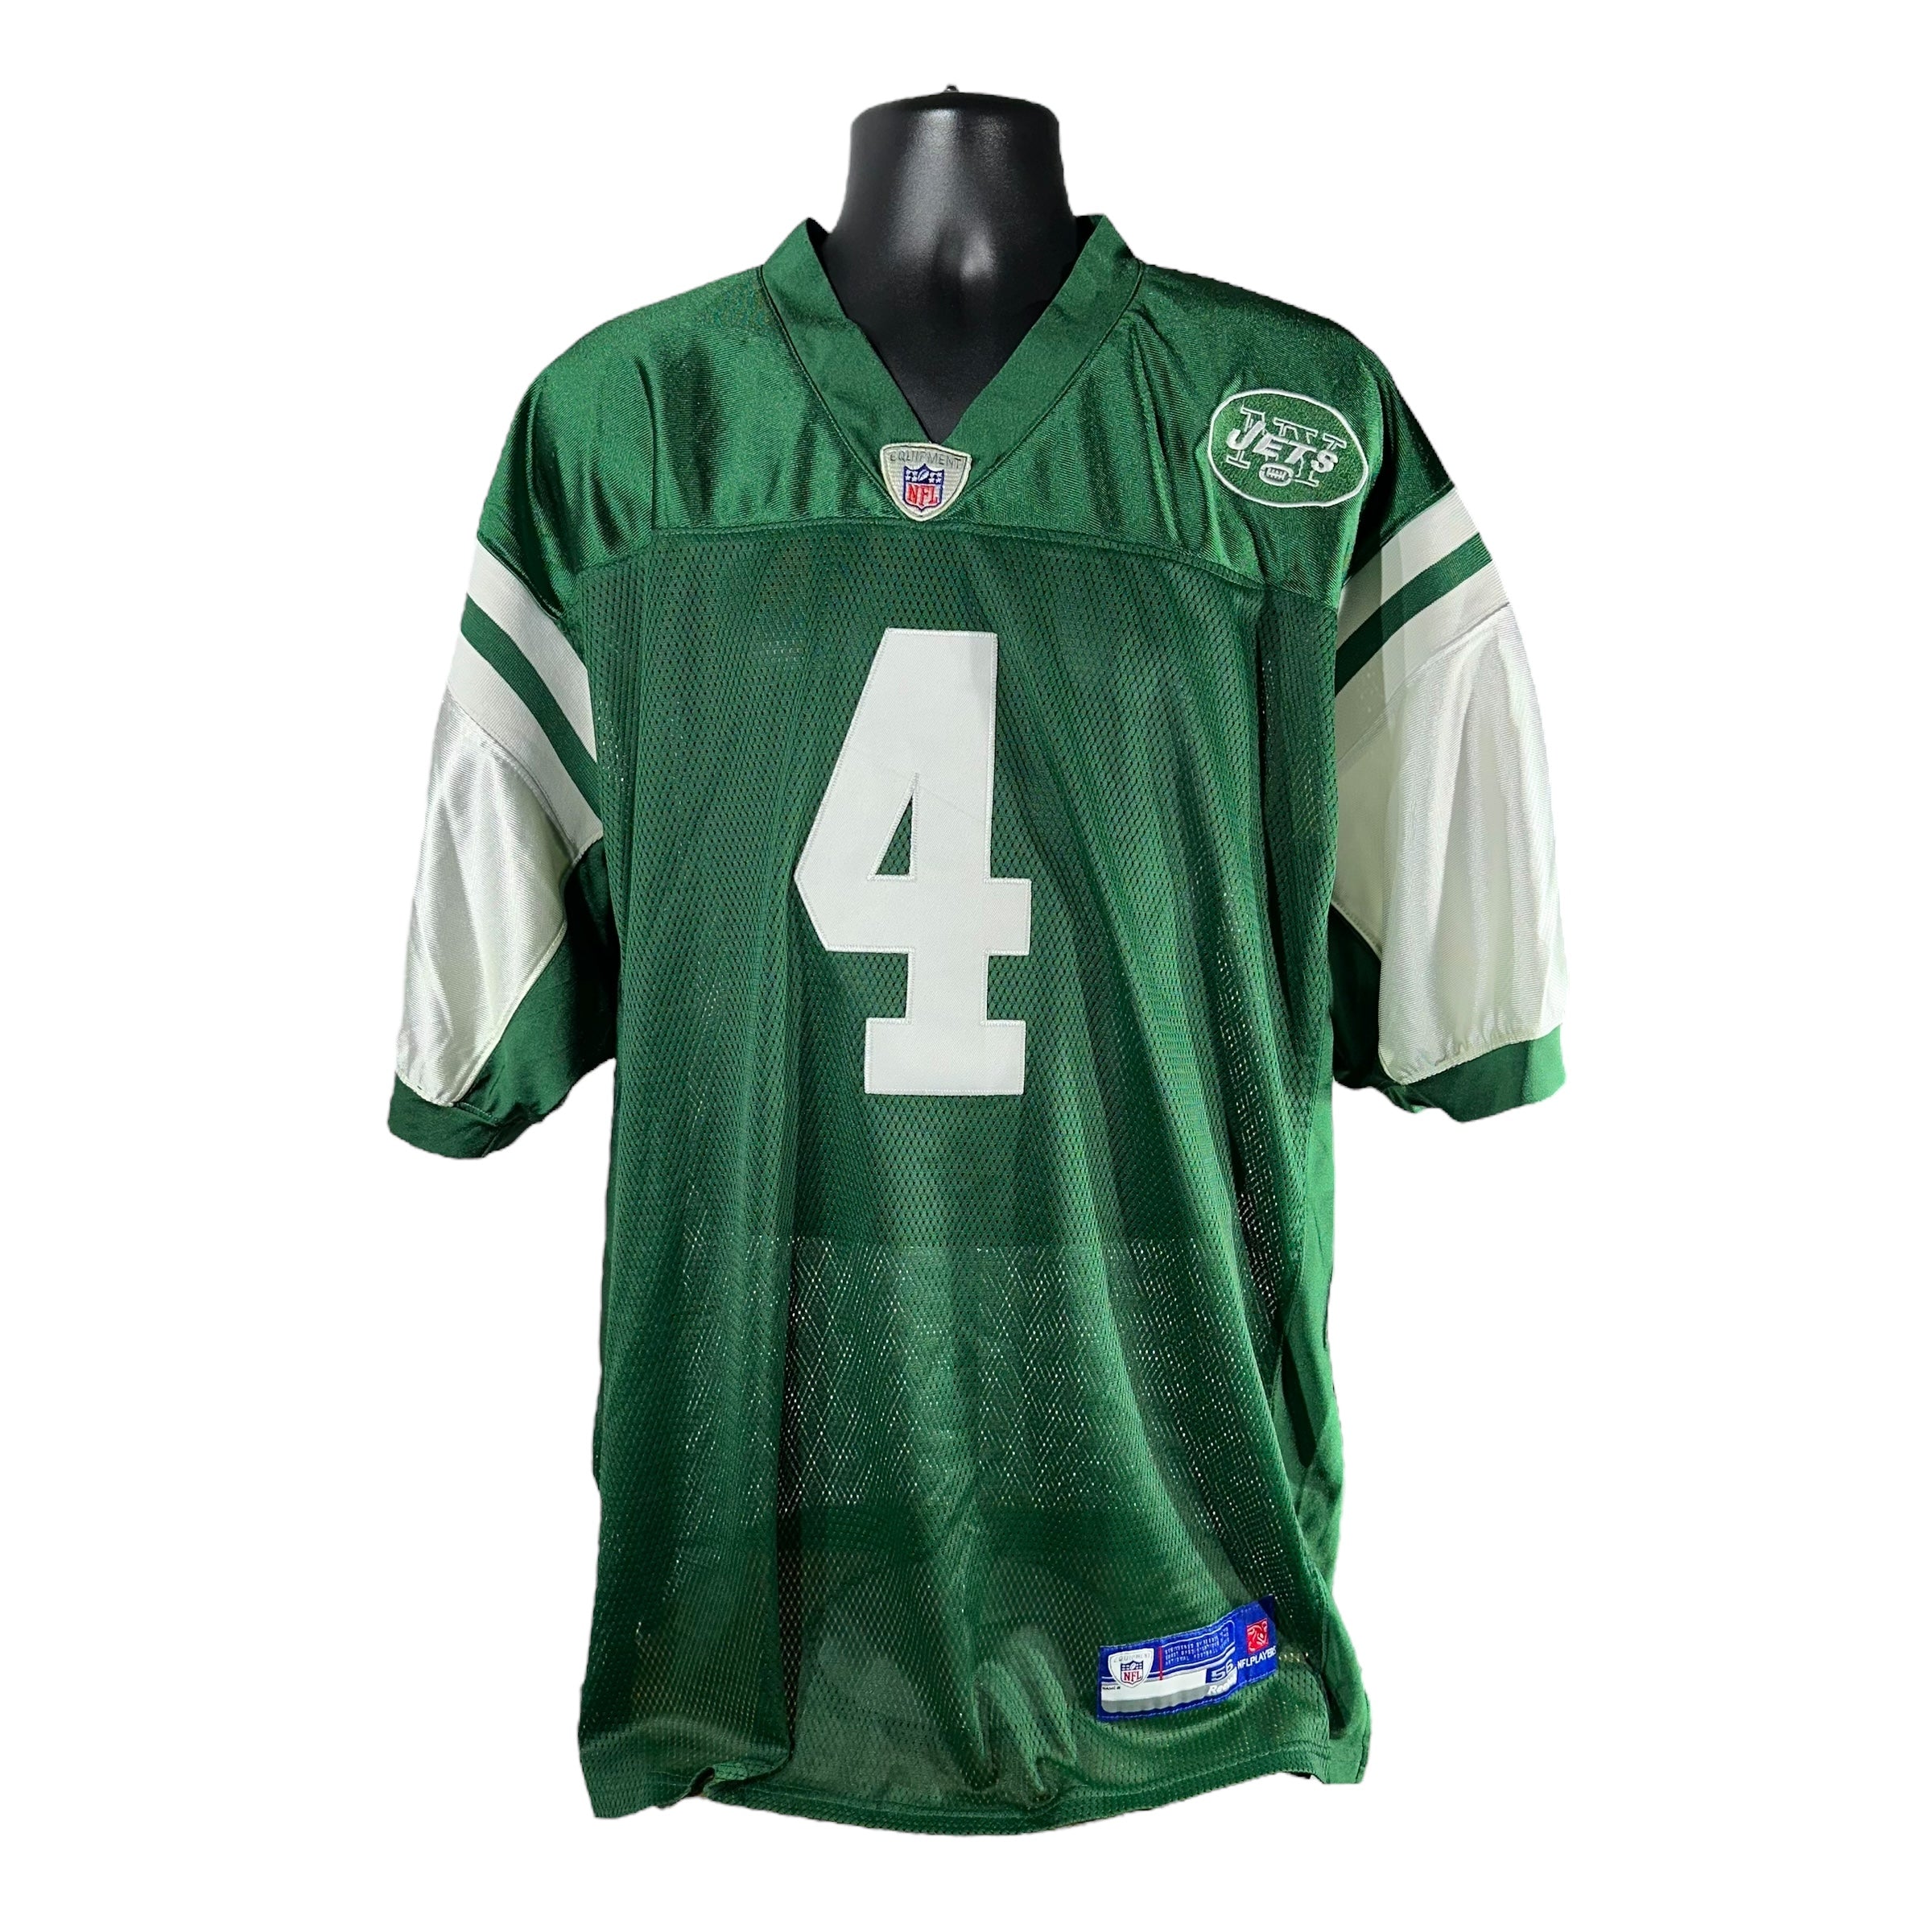 Vintage New York Jets Brett Favre #4 Reebok Jersey